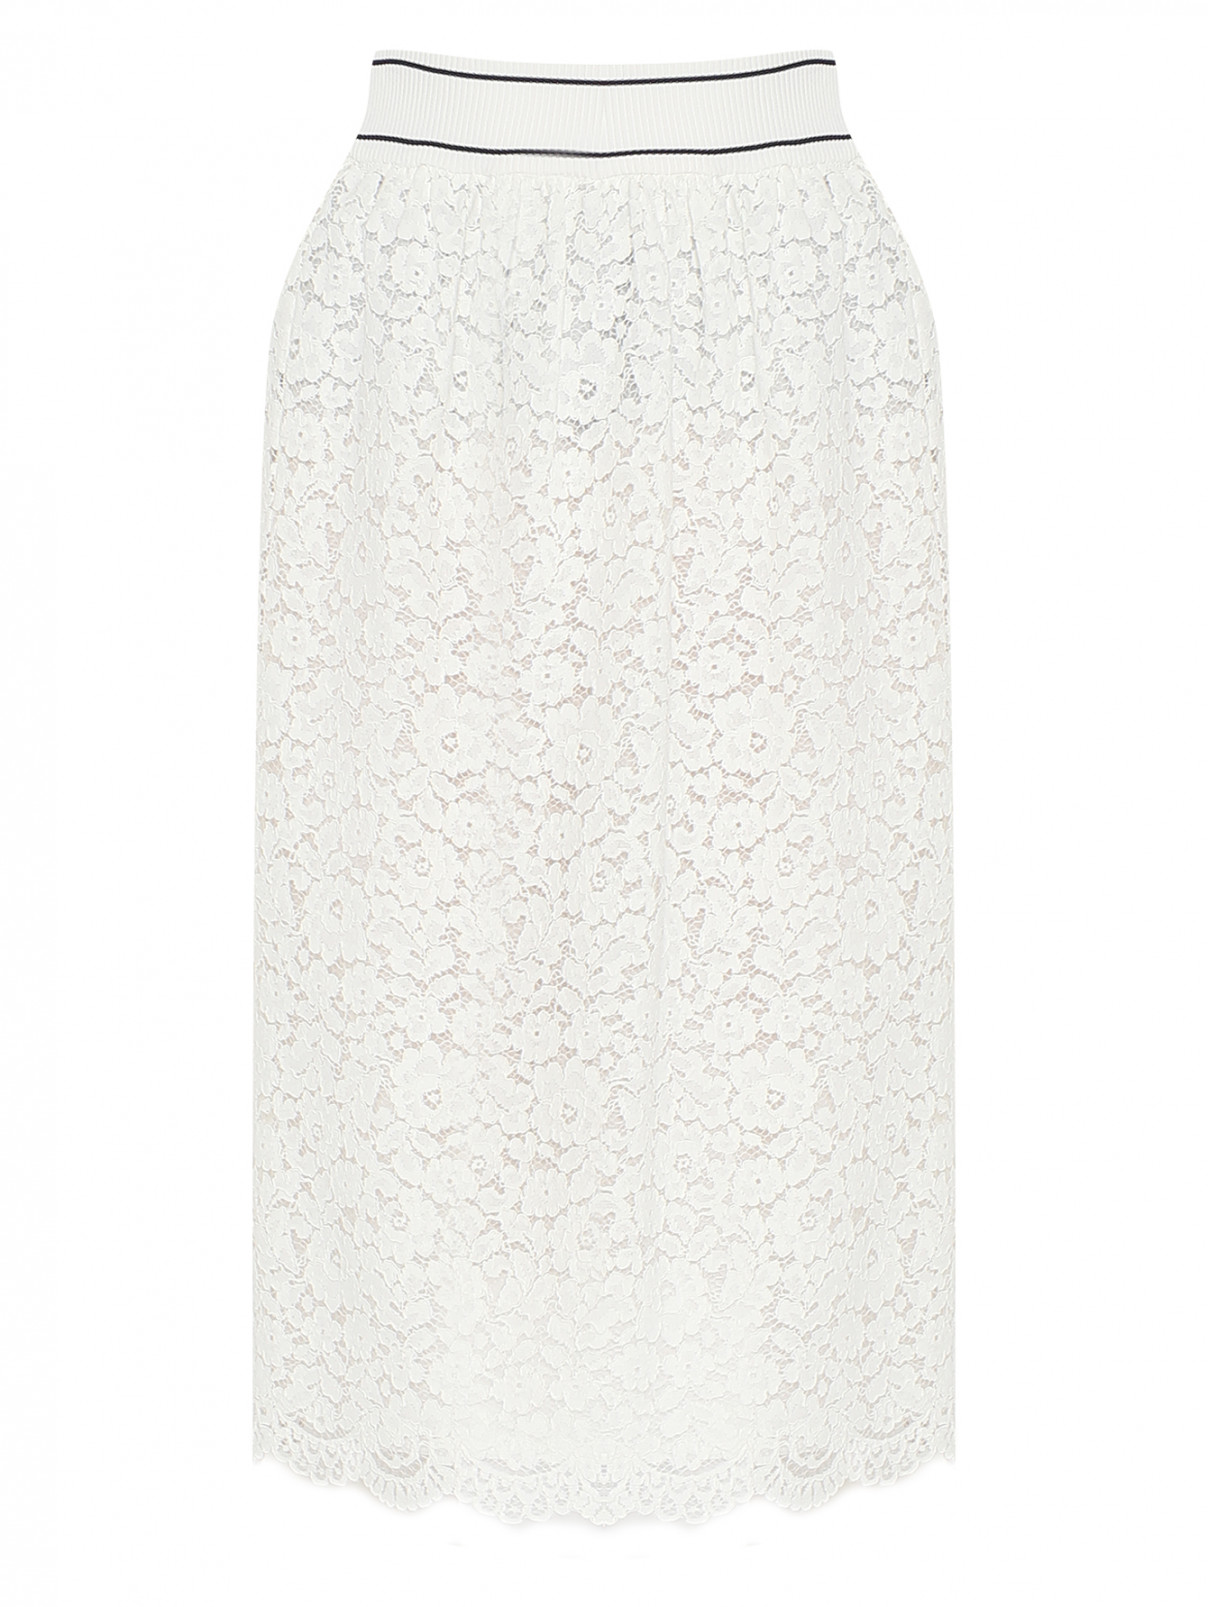 Юбка-миди из кружева на резинке Moschino Boutique  –  Общий вид  – Цвет:  Белый